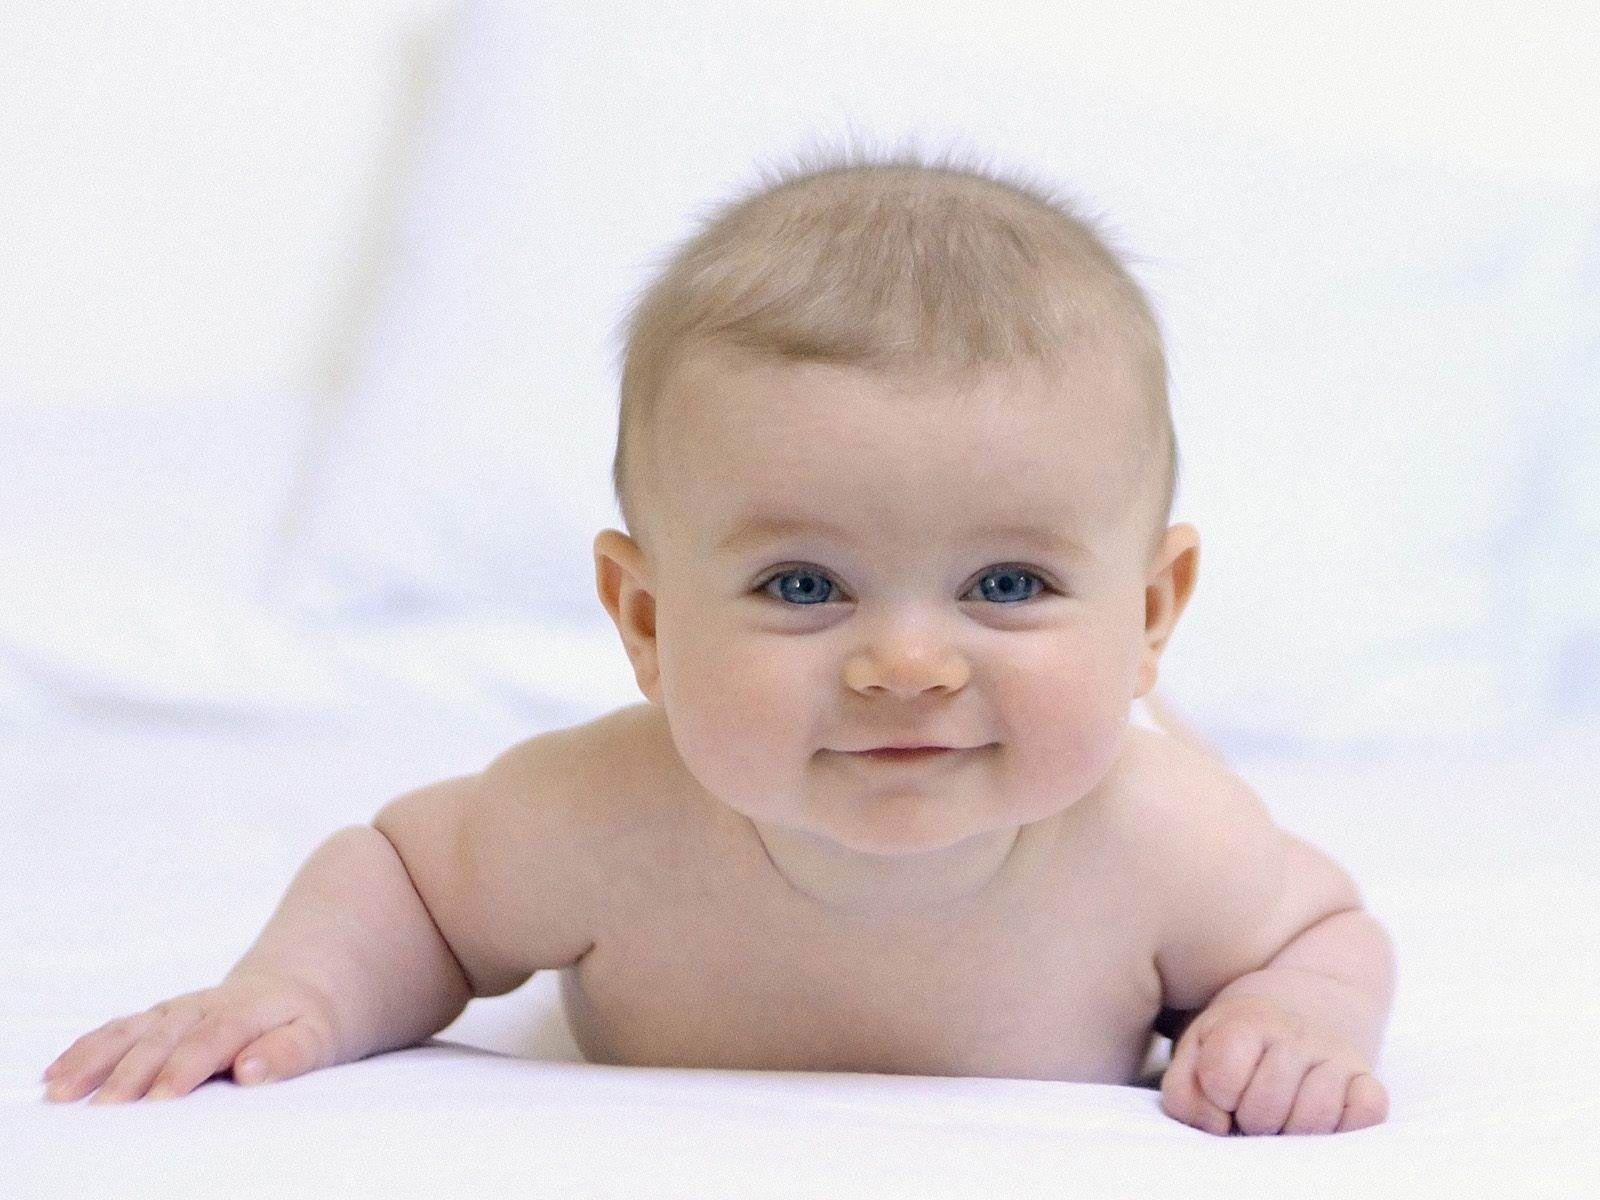 sweet smiling babies wallpapers